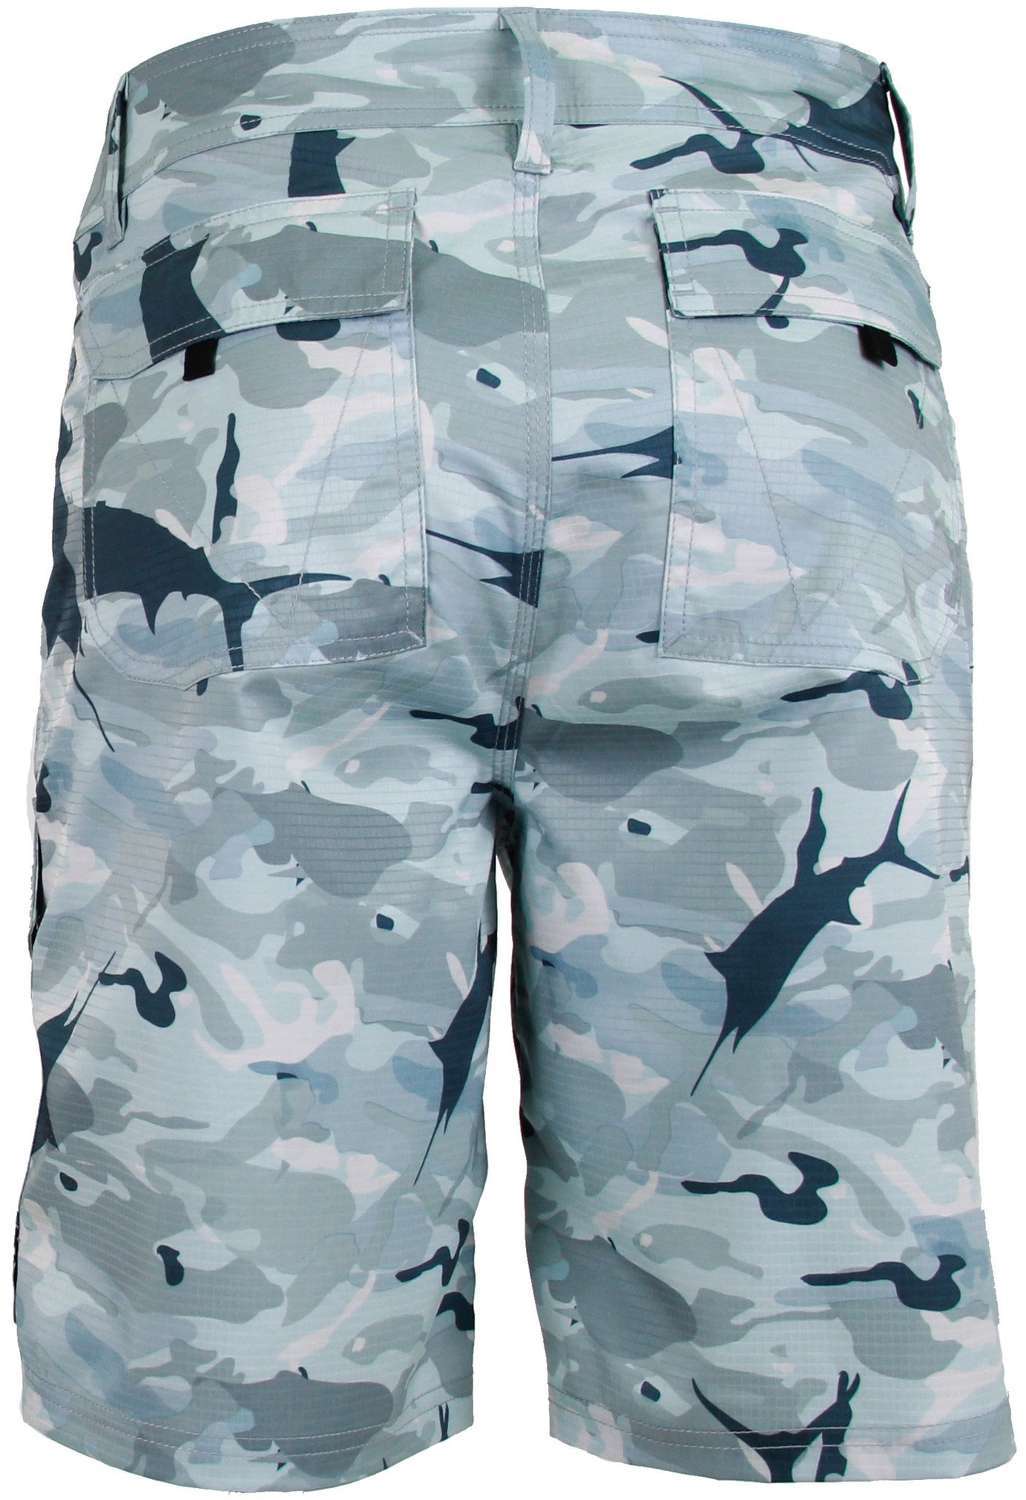 AFTCO Tactical Fishing Shorts (Grey Camo - 30)